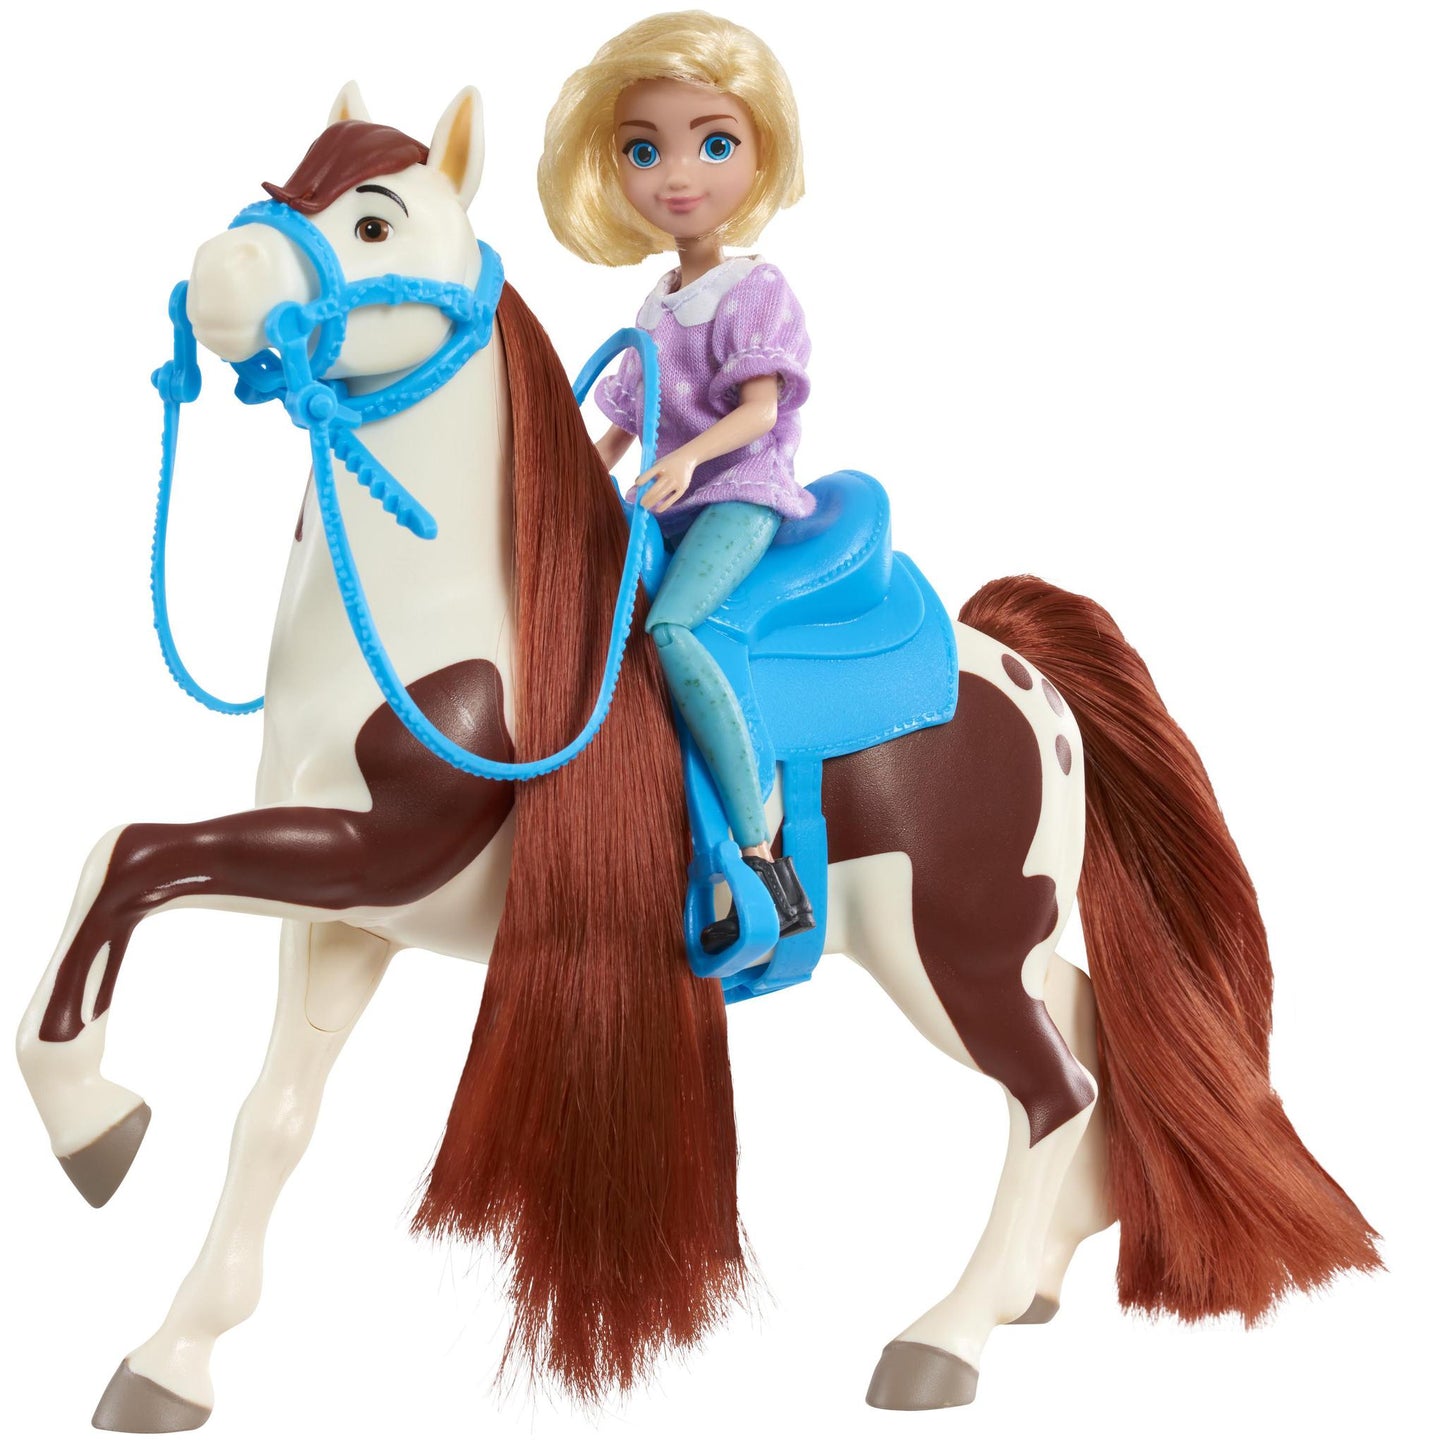 DreamWorks Spirit Riding Free Spirit Riding Free Collector Doll & Horse - Abigail & Boomerang Horse Toy Set